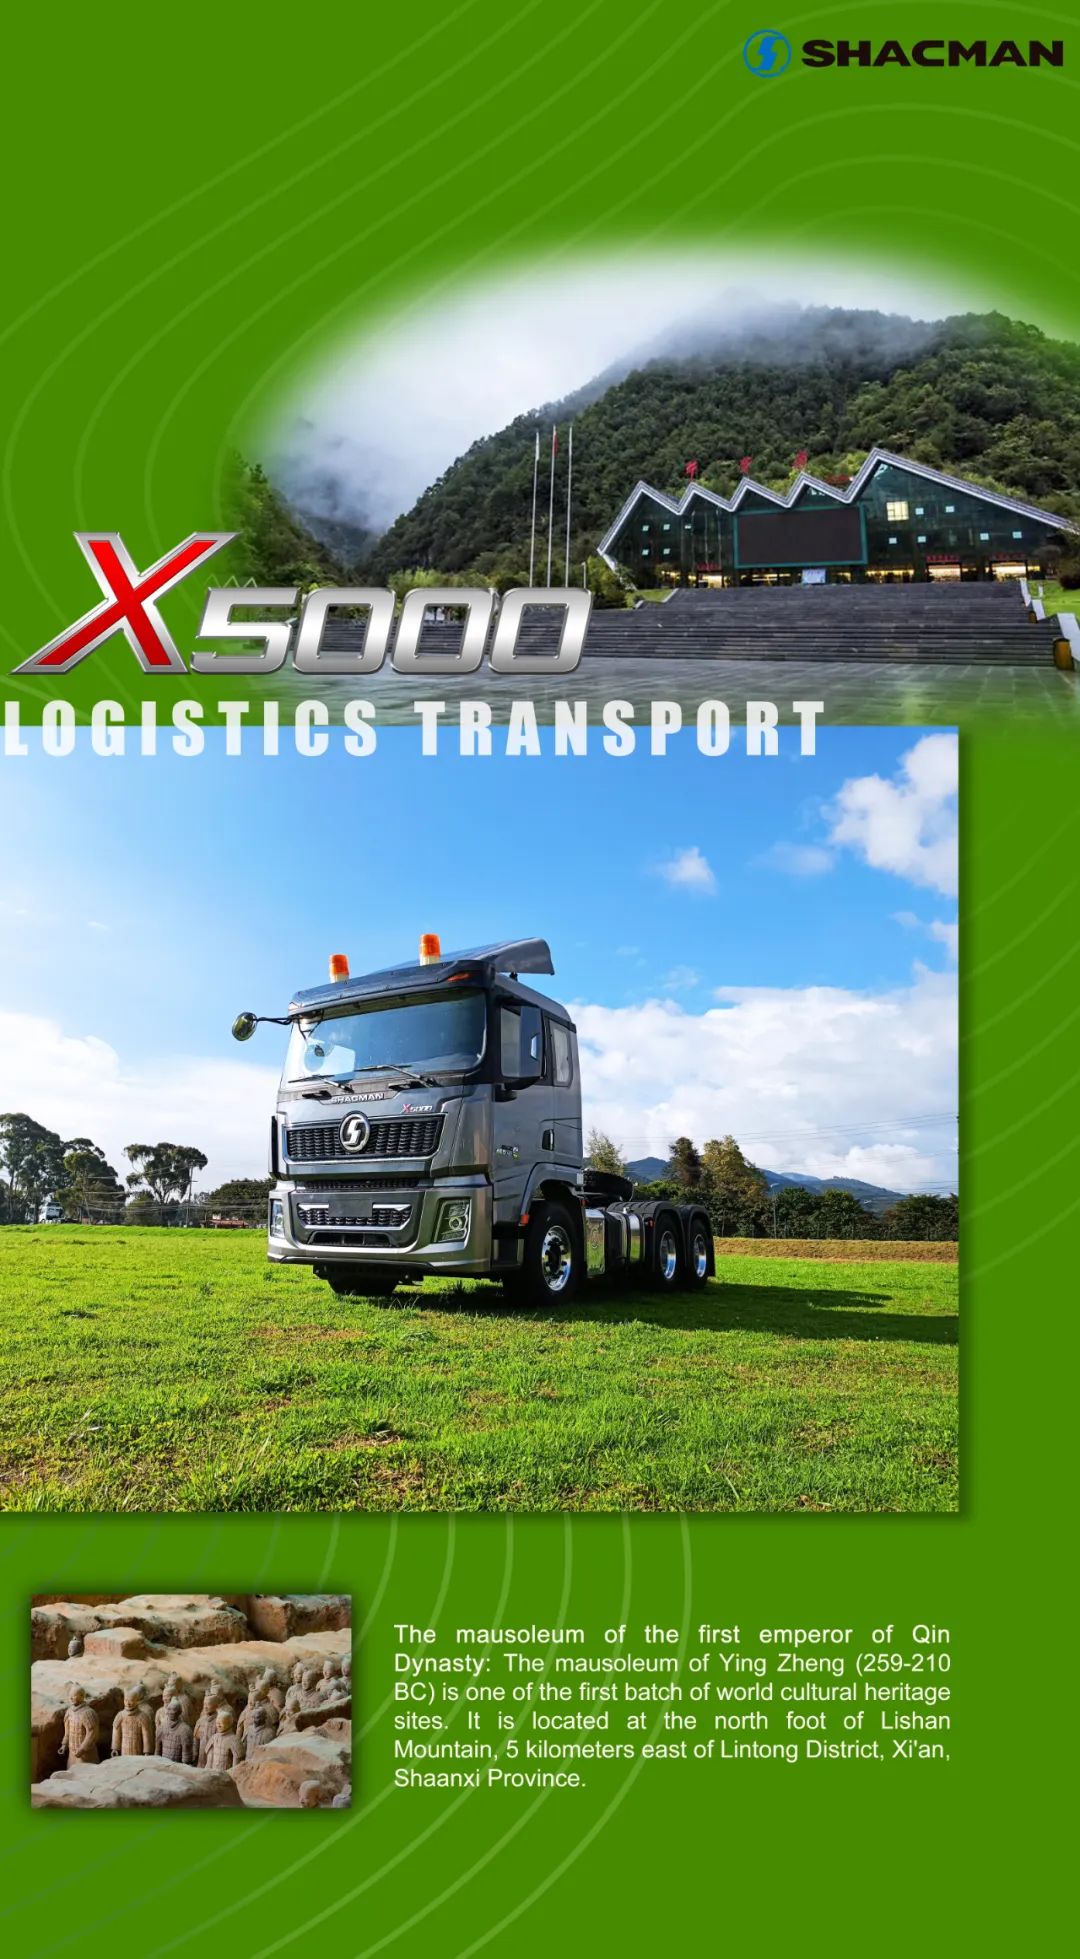 SHACMAN X5000: Made for Logistics Transport